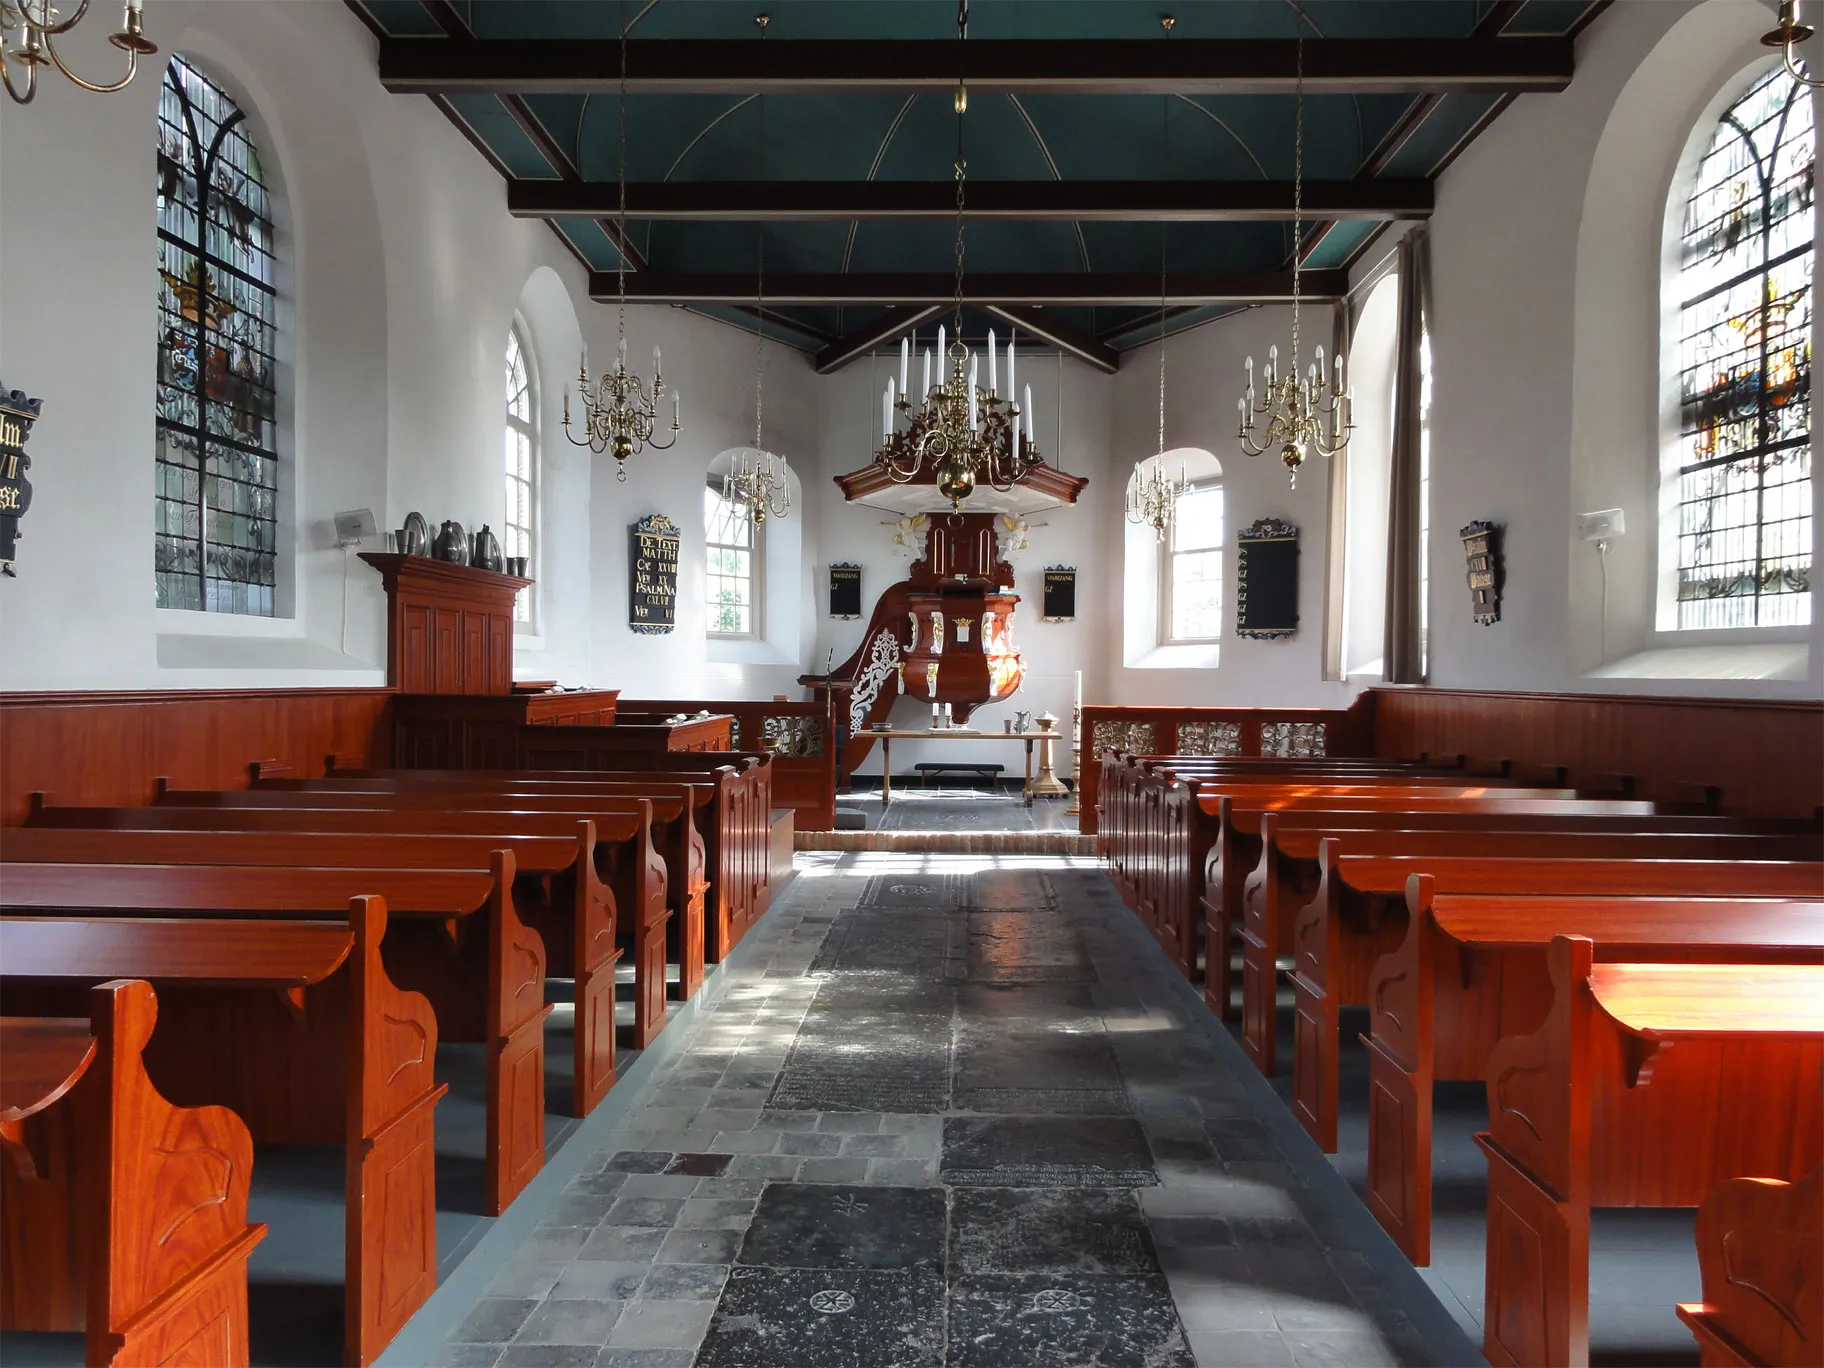 Photo showing: Interieur van de kerk van Engwierum